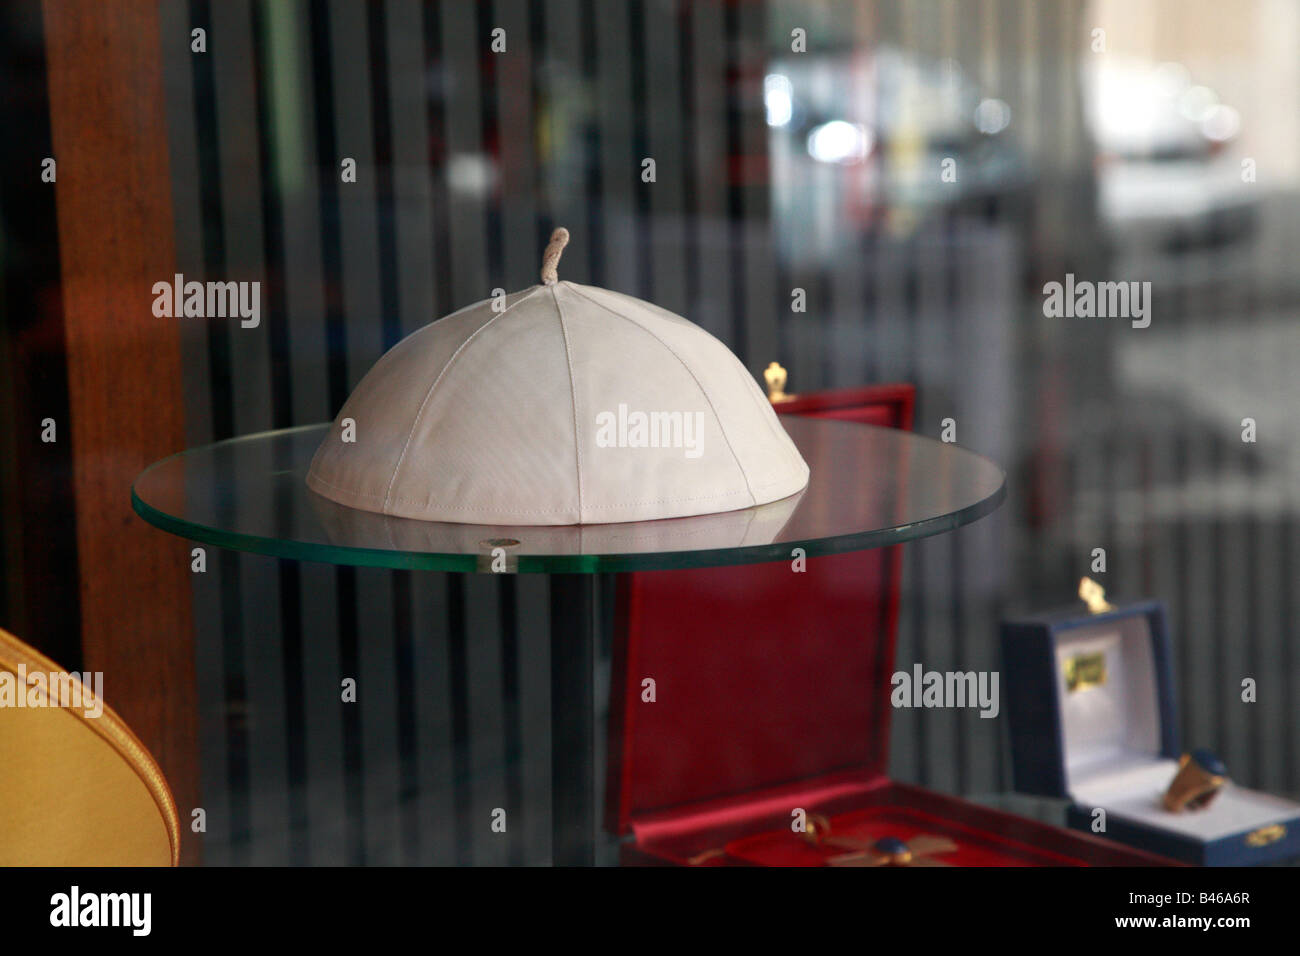 Roman catholic priests skull cap on display in shop window Stock Photo